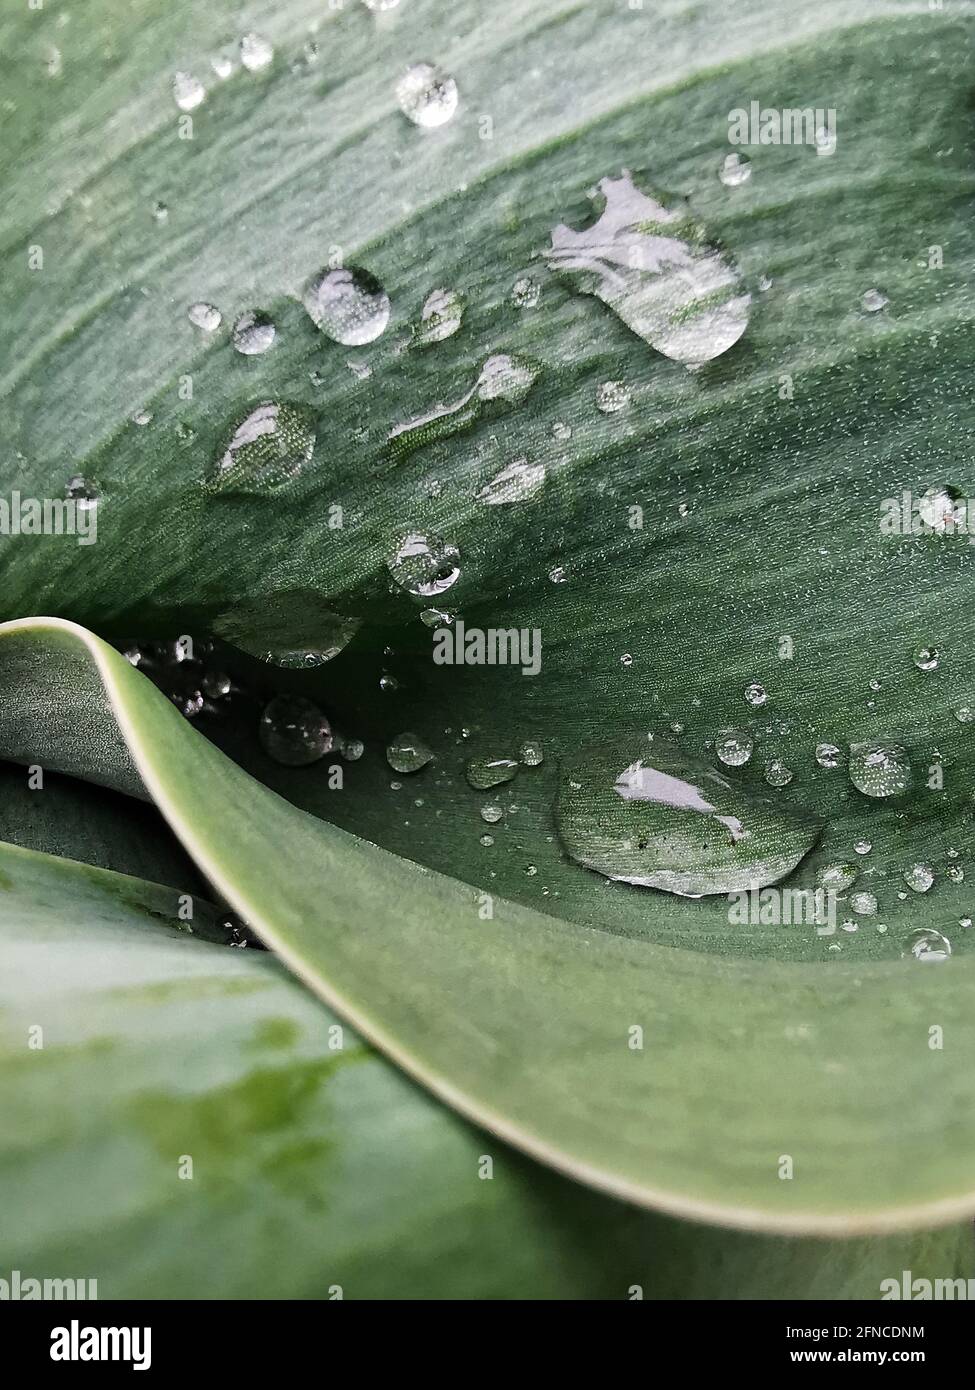 A macro shot of water drops on fresh green leaf Stock Photo